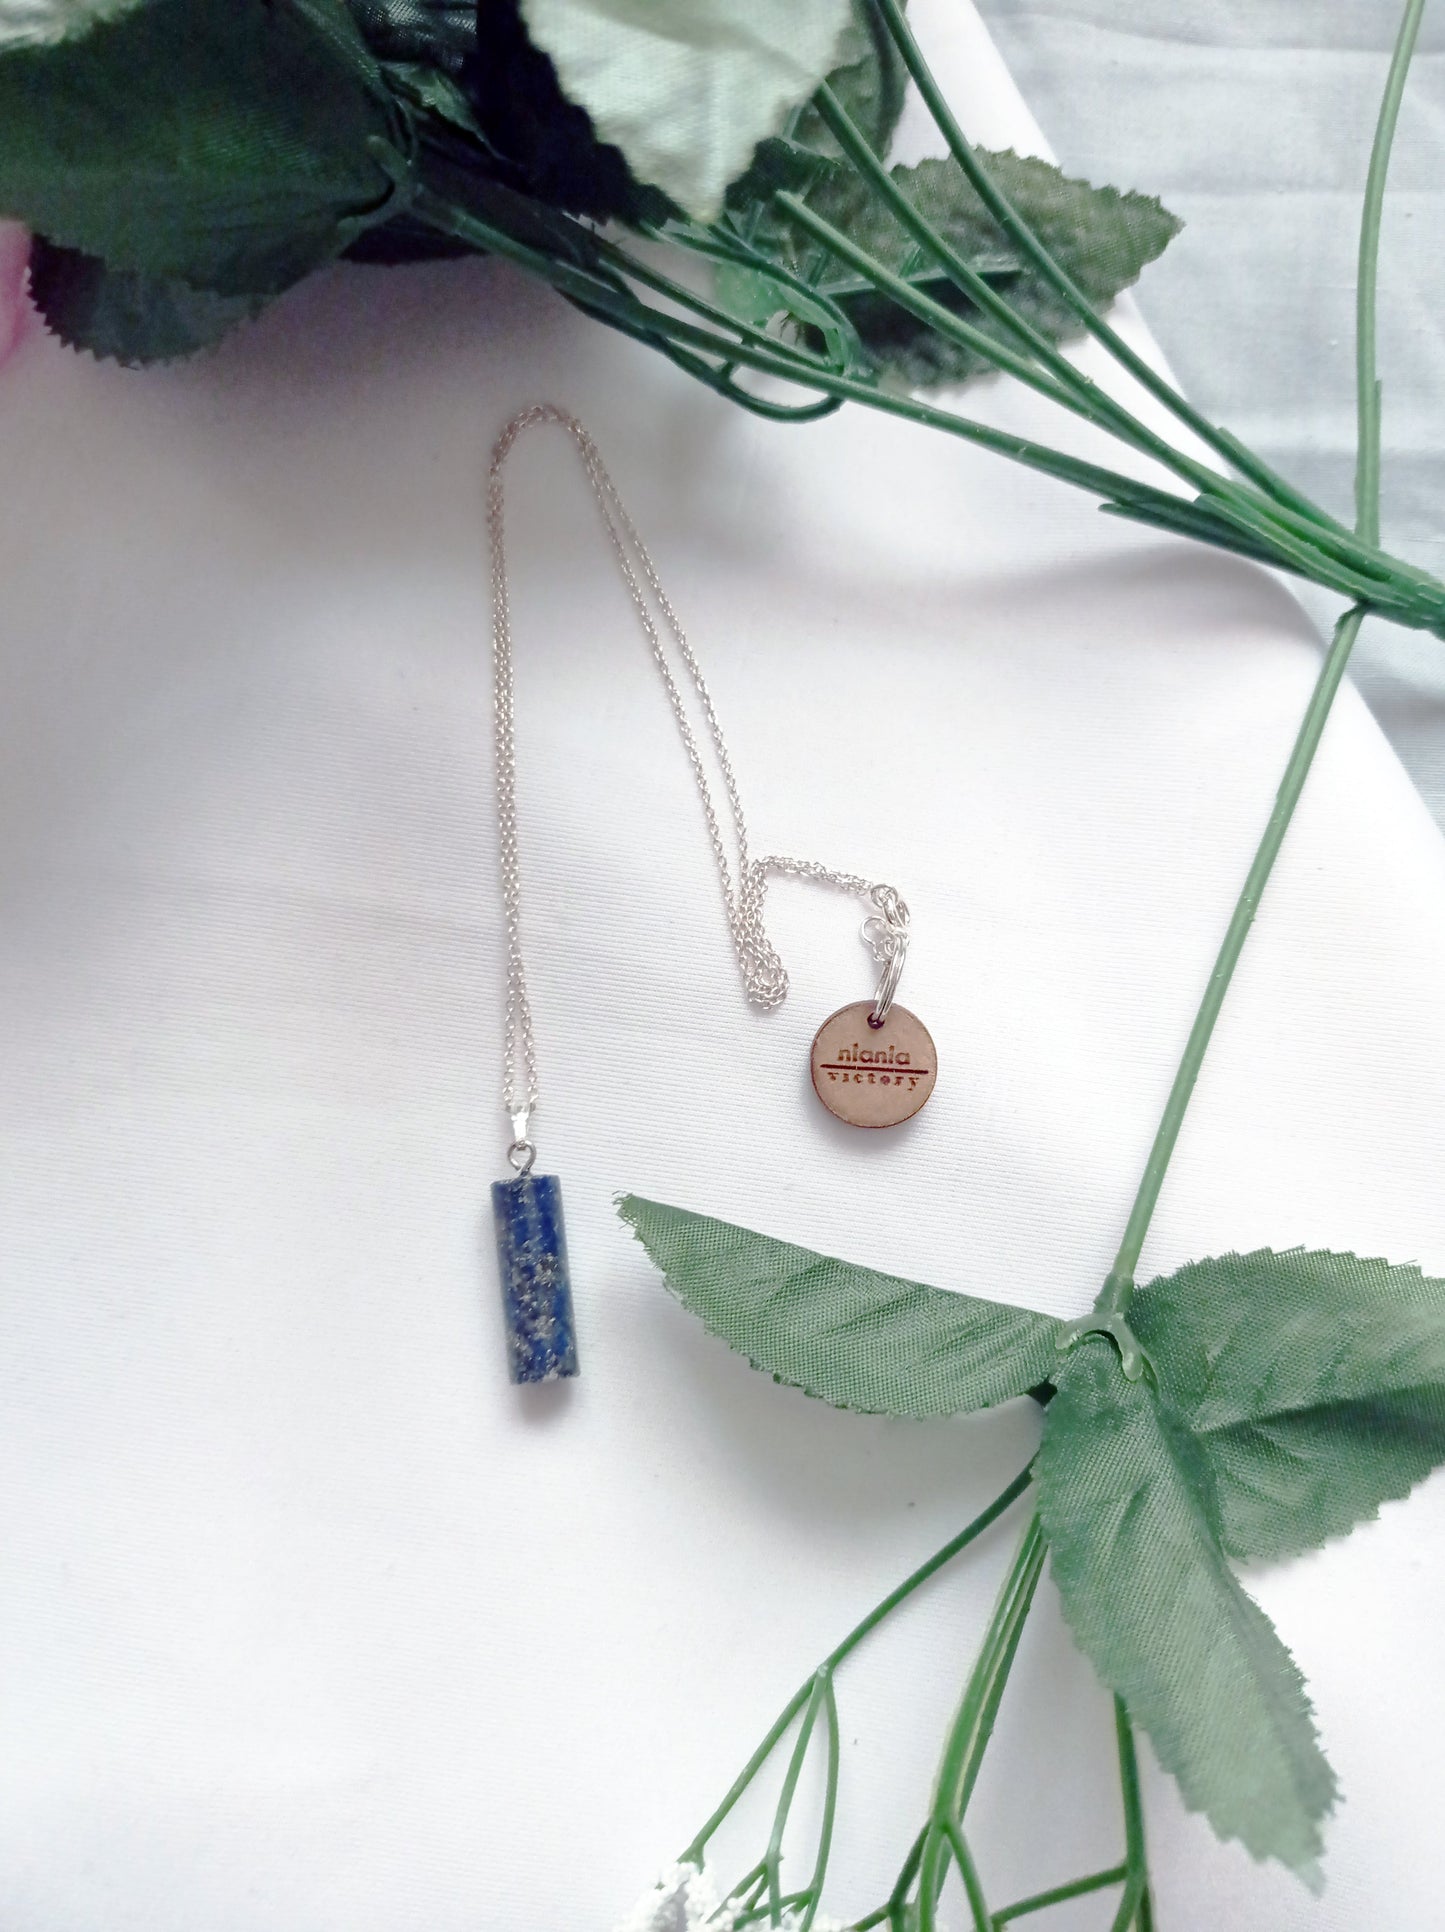 Lapis Lazuli Necklace, Lapis Lazuli Pendant, Sterling Silver Necklace, Gemstone Pendant Necklace | by nlanlaVictory-6